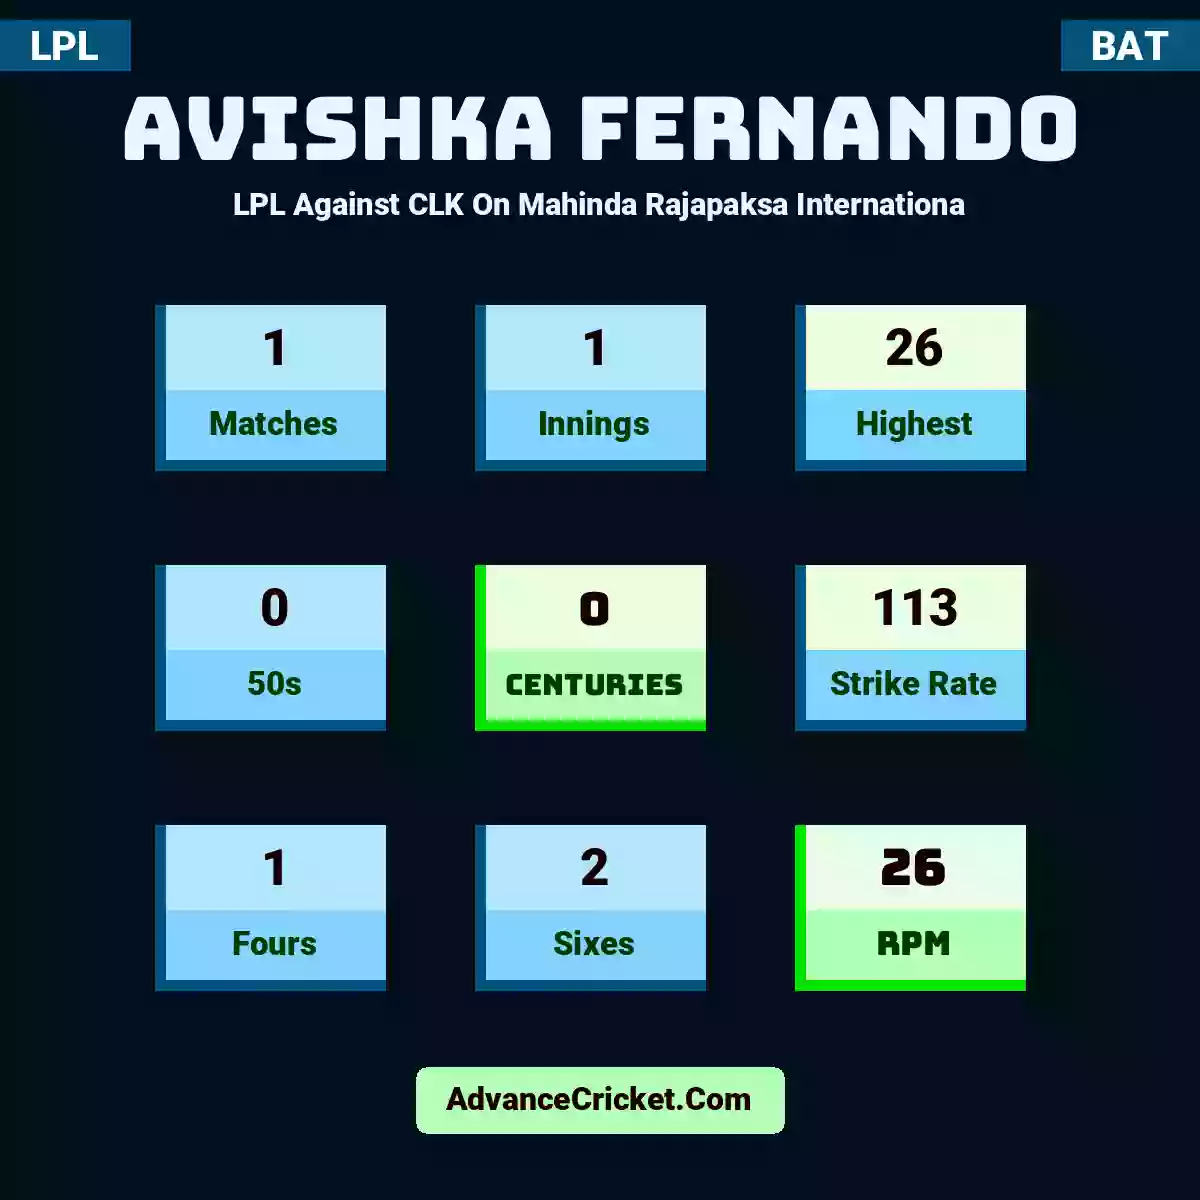 Avishka Fernando LPL  Against CLK On Mahinda Rajapaksa Internationa, Avishka Fernando played 1 matches, scored 26 runs as highest, 0 half-centuries, and 0 centuries, with a strike rate of 113. A.Fernando hit 1 fours and 2 sixes, with an RPM of 26.